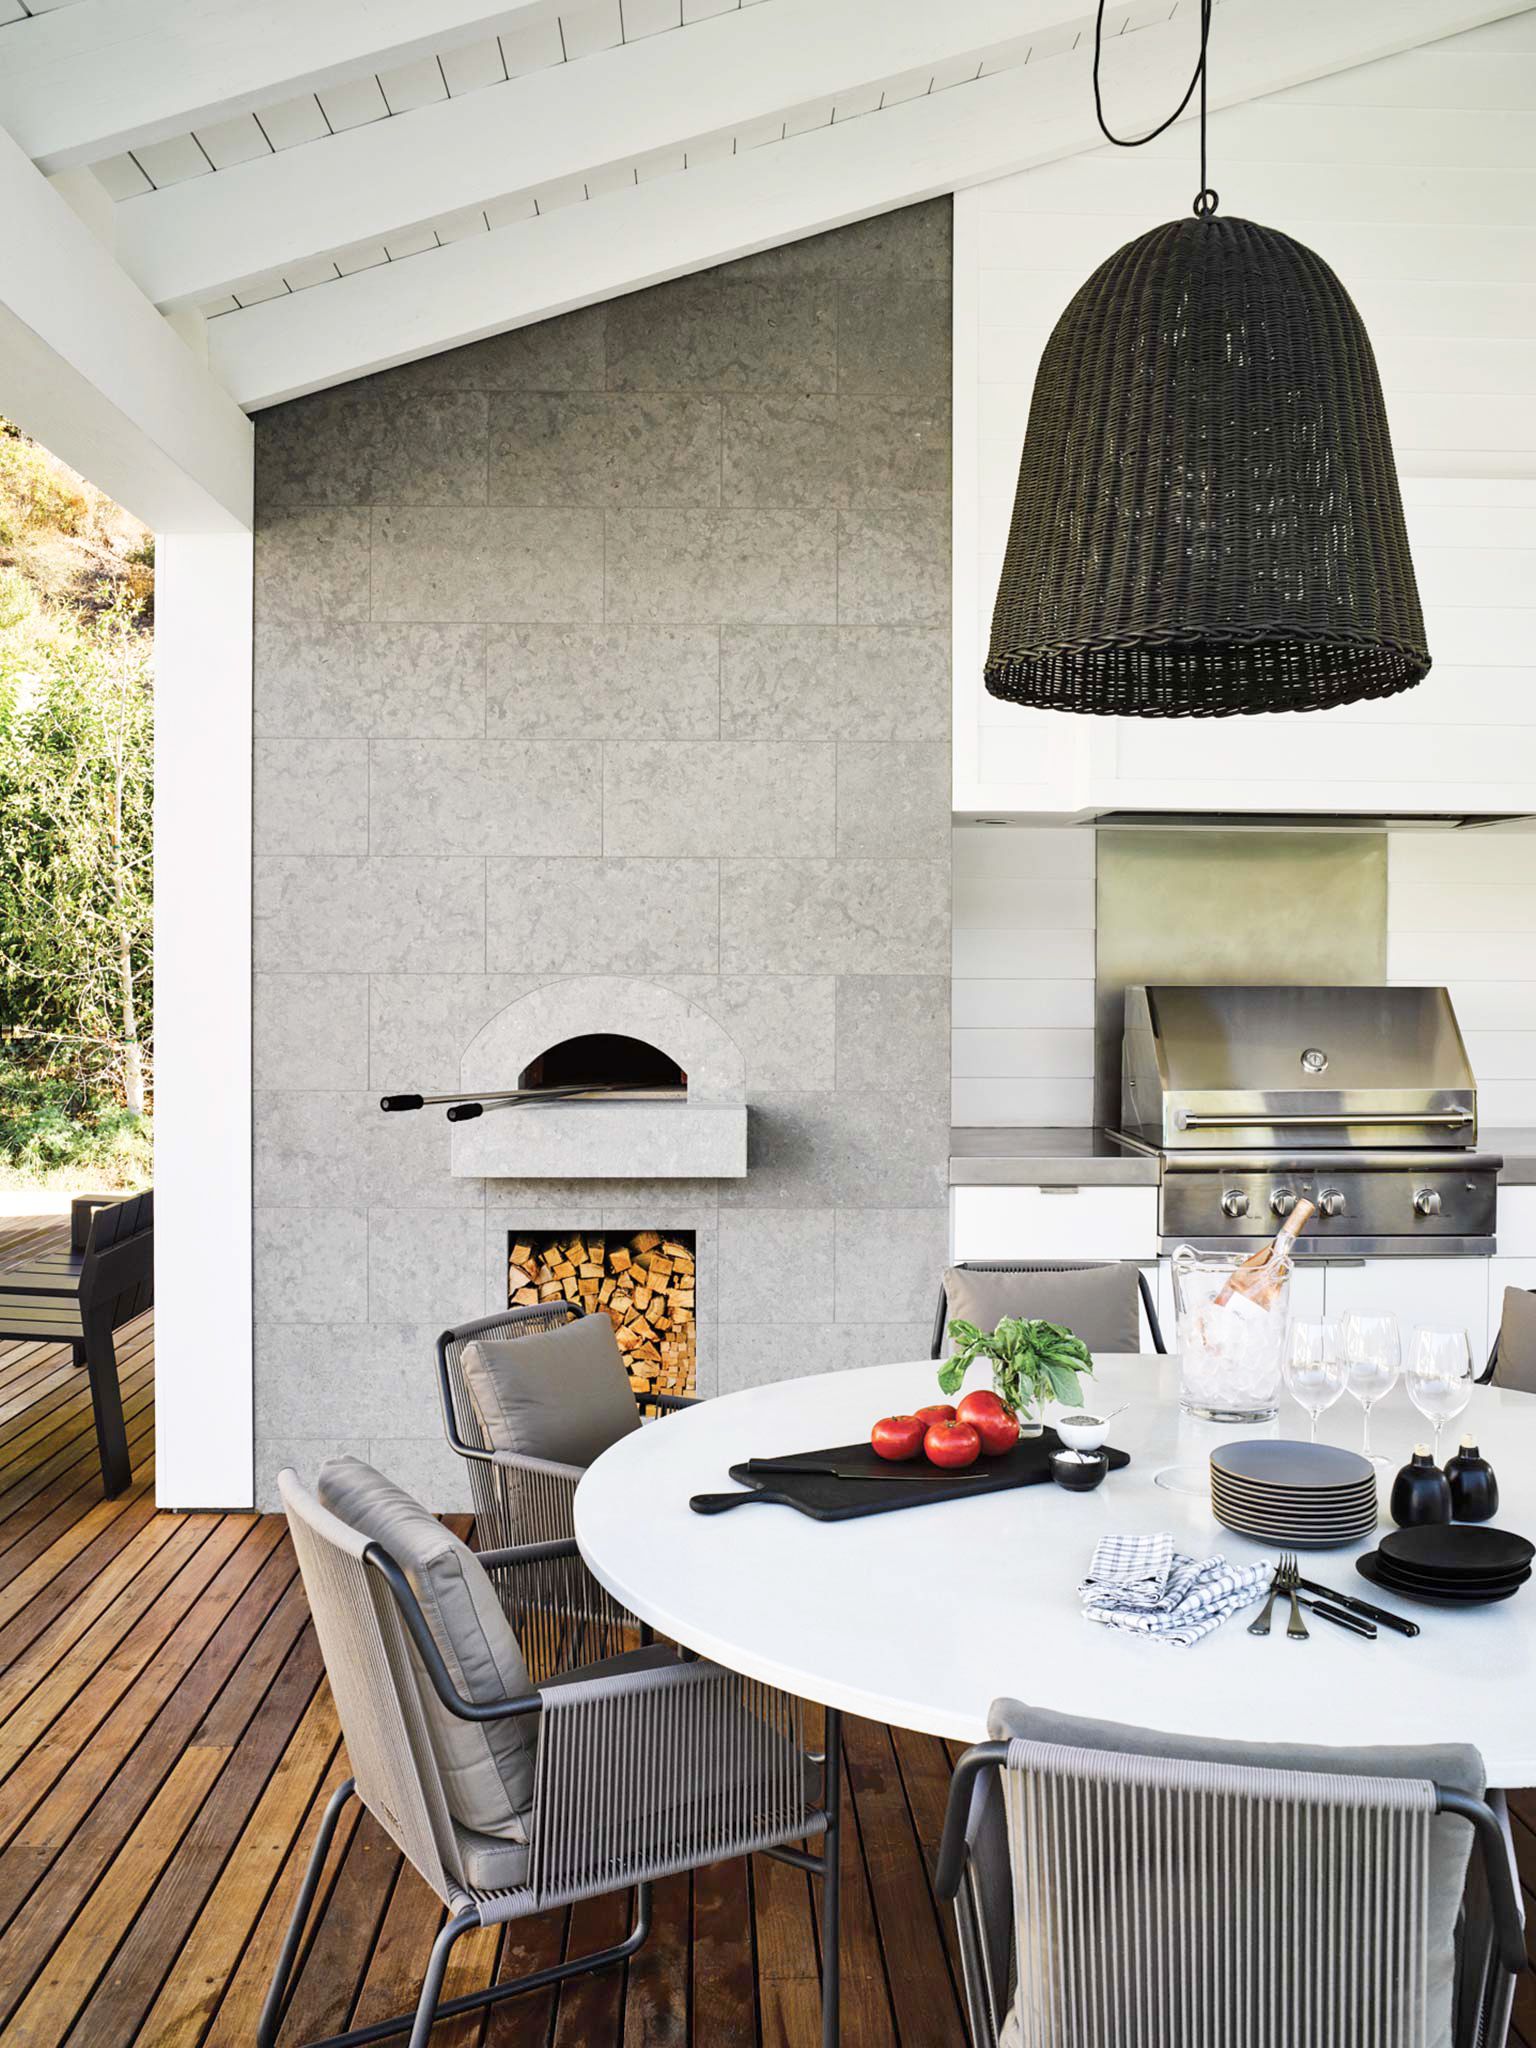 16 Outdoor Kitchen Design Ideas and Pictures - Alfresco Kitchen Styles